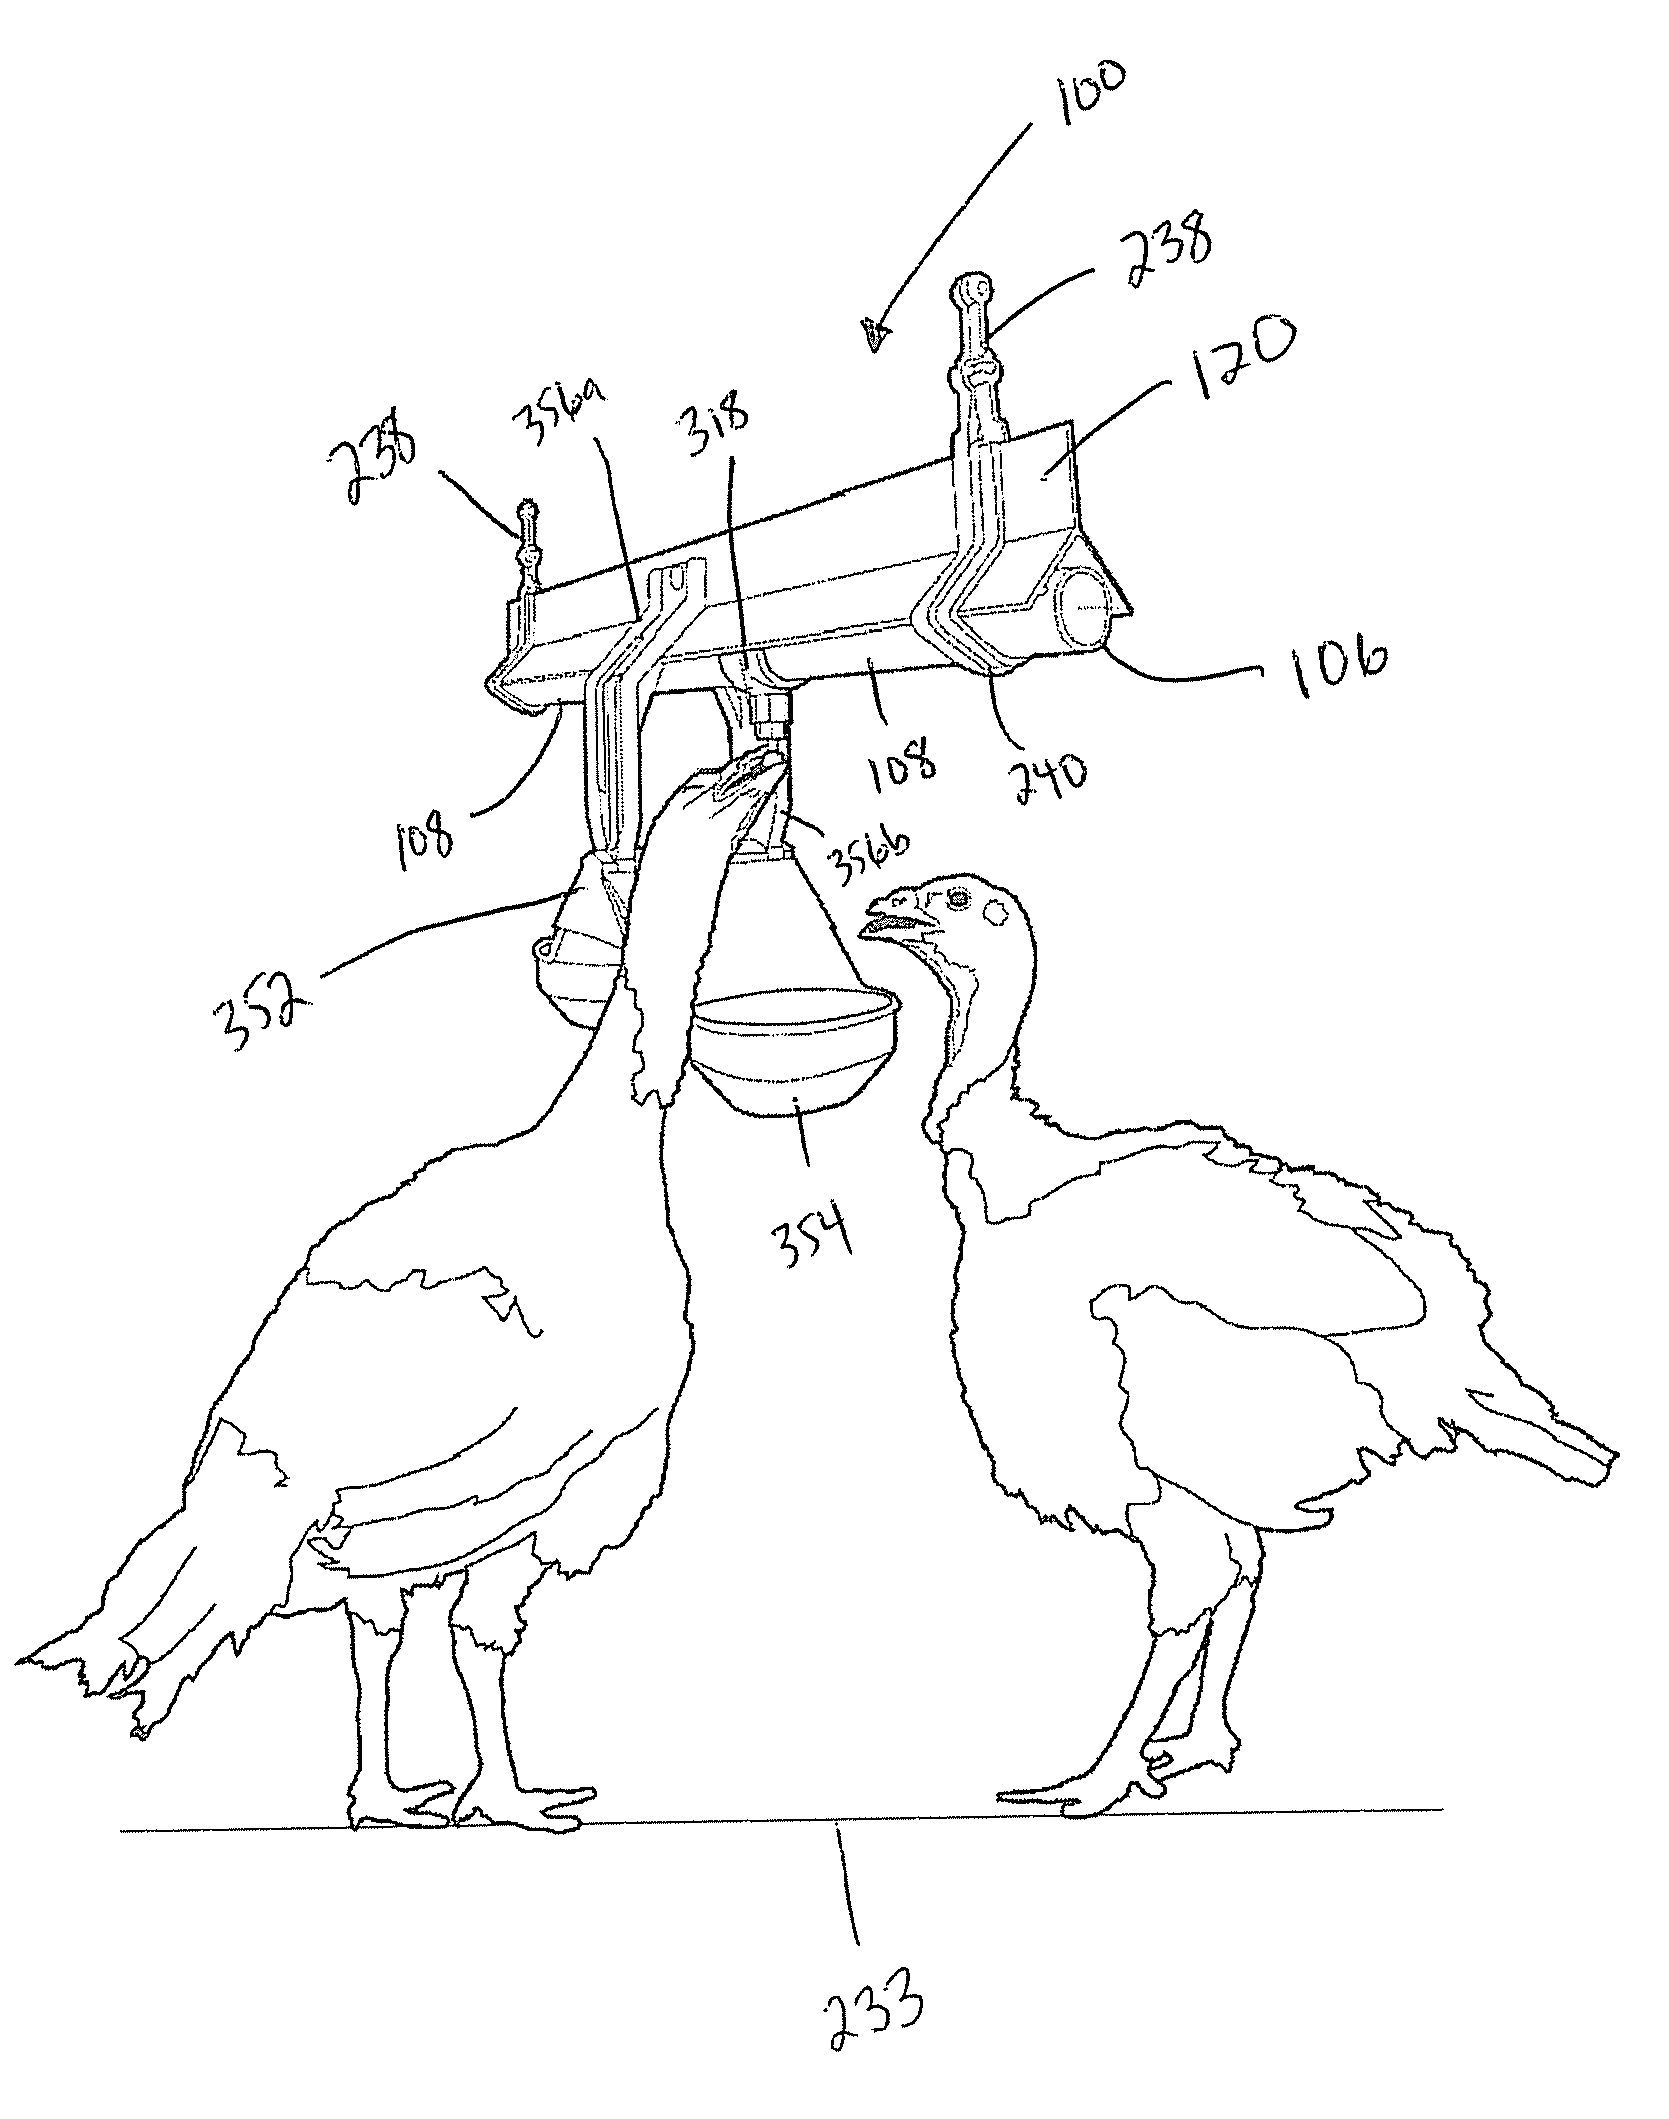 Watering system for turkeys